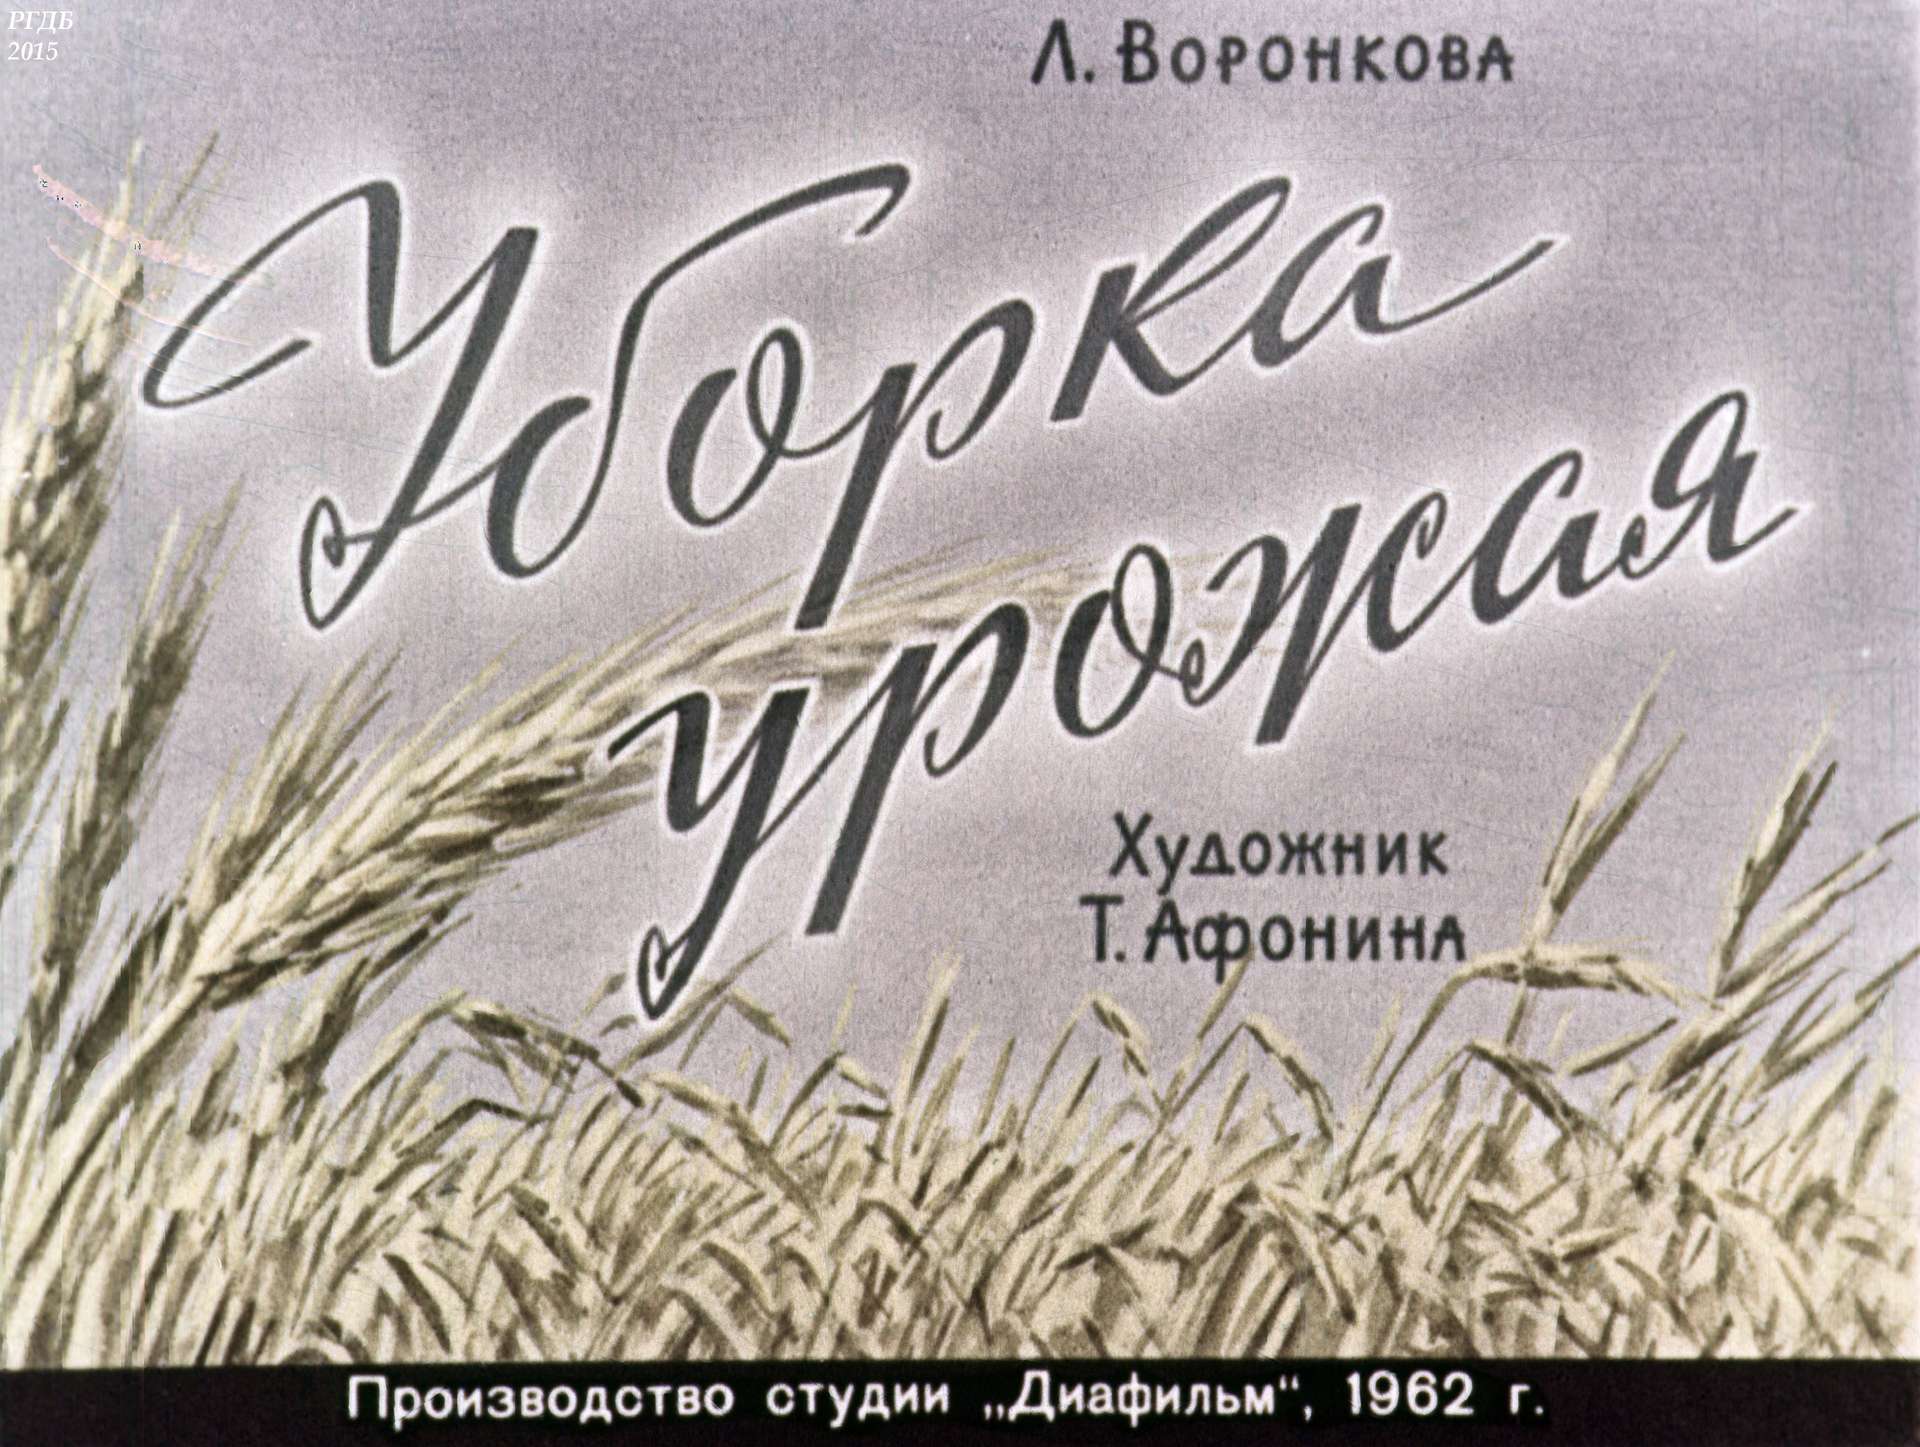 Воронкова Любовь Федоровна - Уборка урожая - 1962